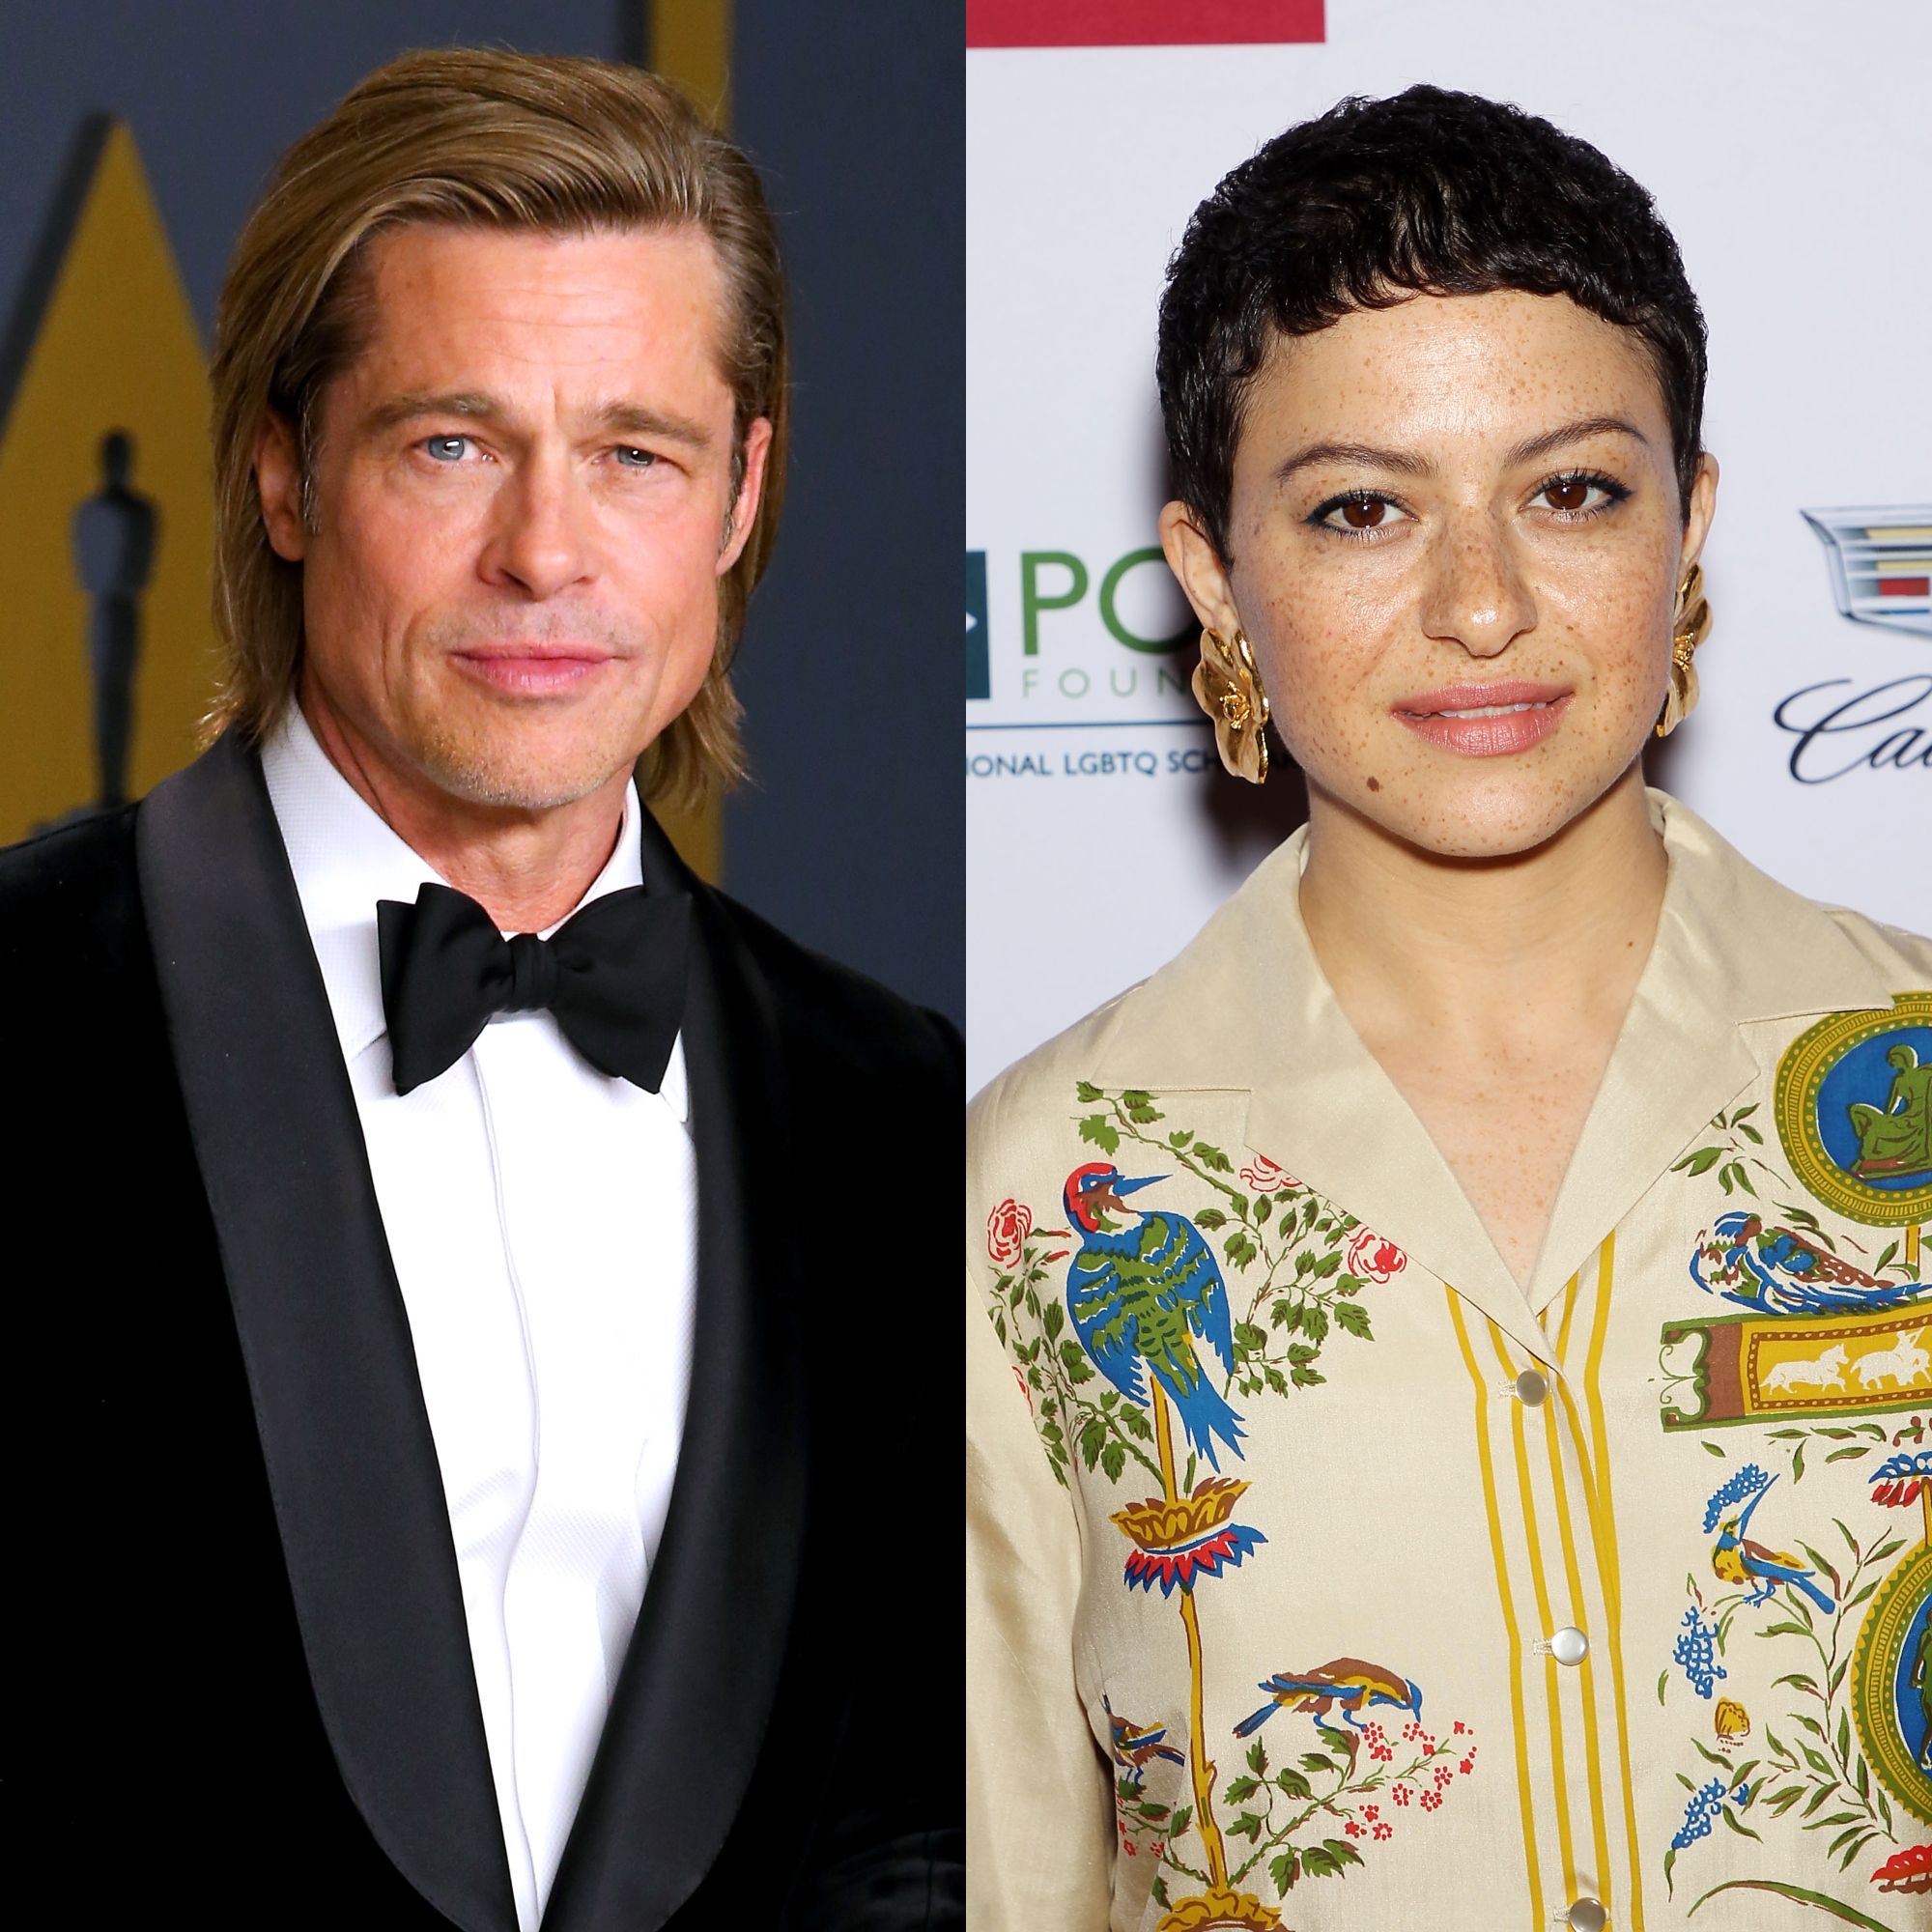 Brad Pitt and Alia Shawkat Are 'Just Friends' But May 'Turn Into